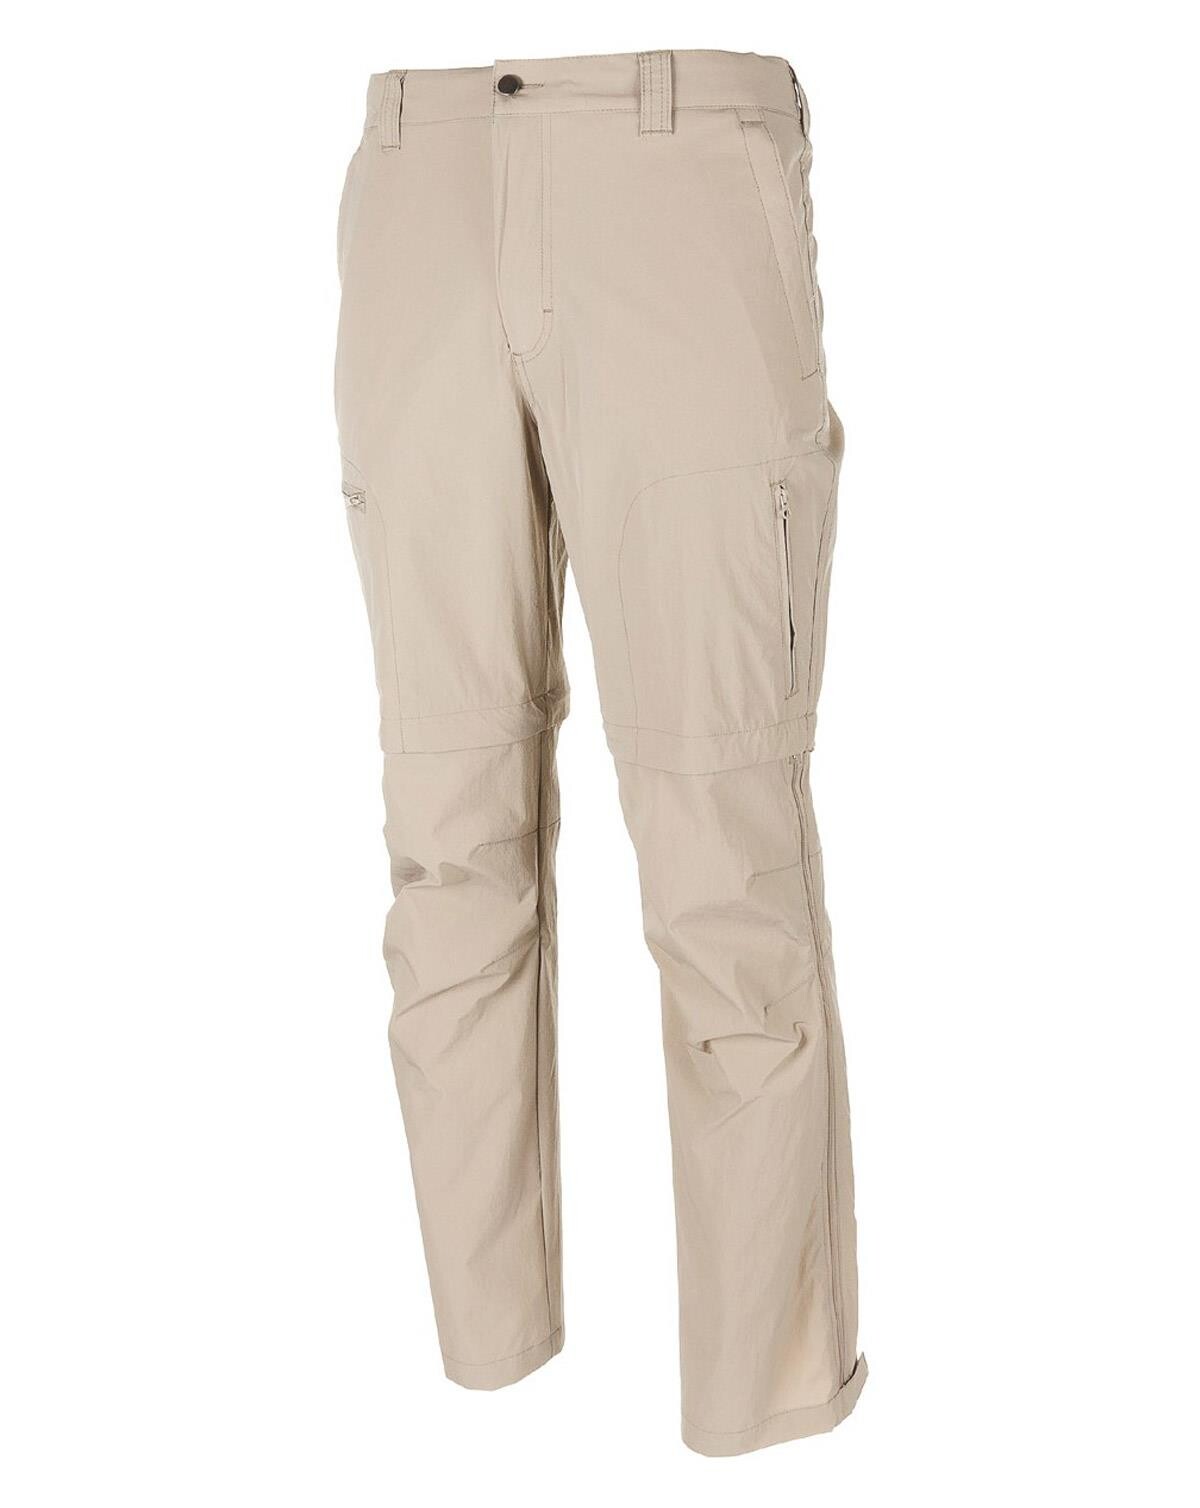 MFH Trekking Pants (Khaki, XS)